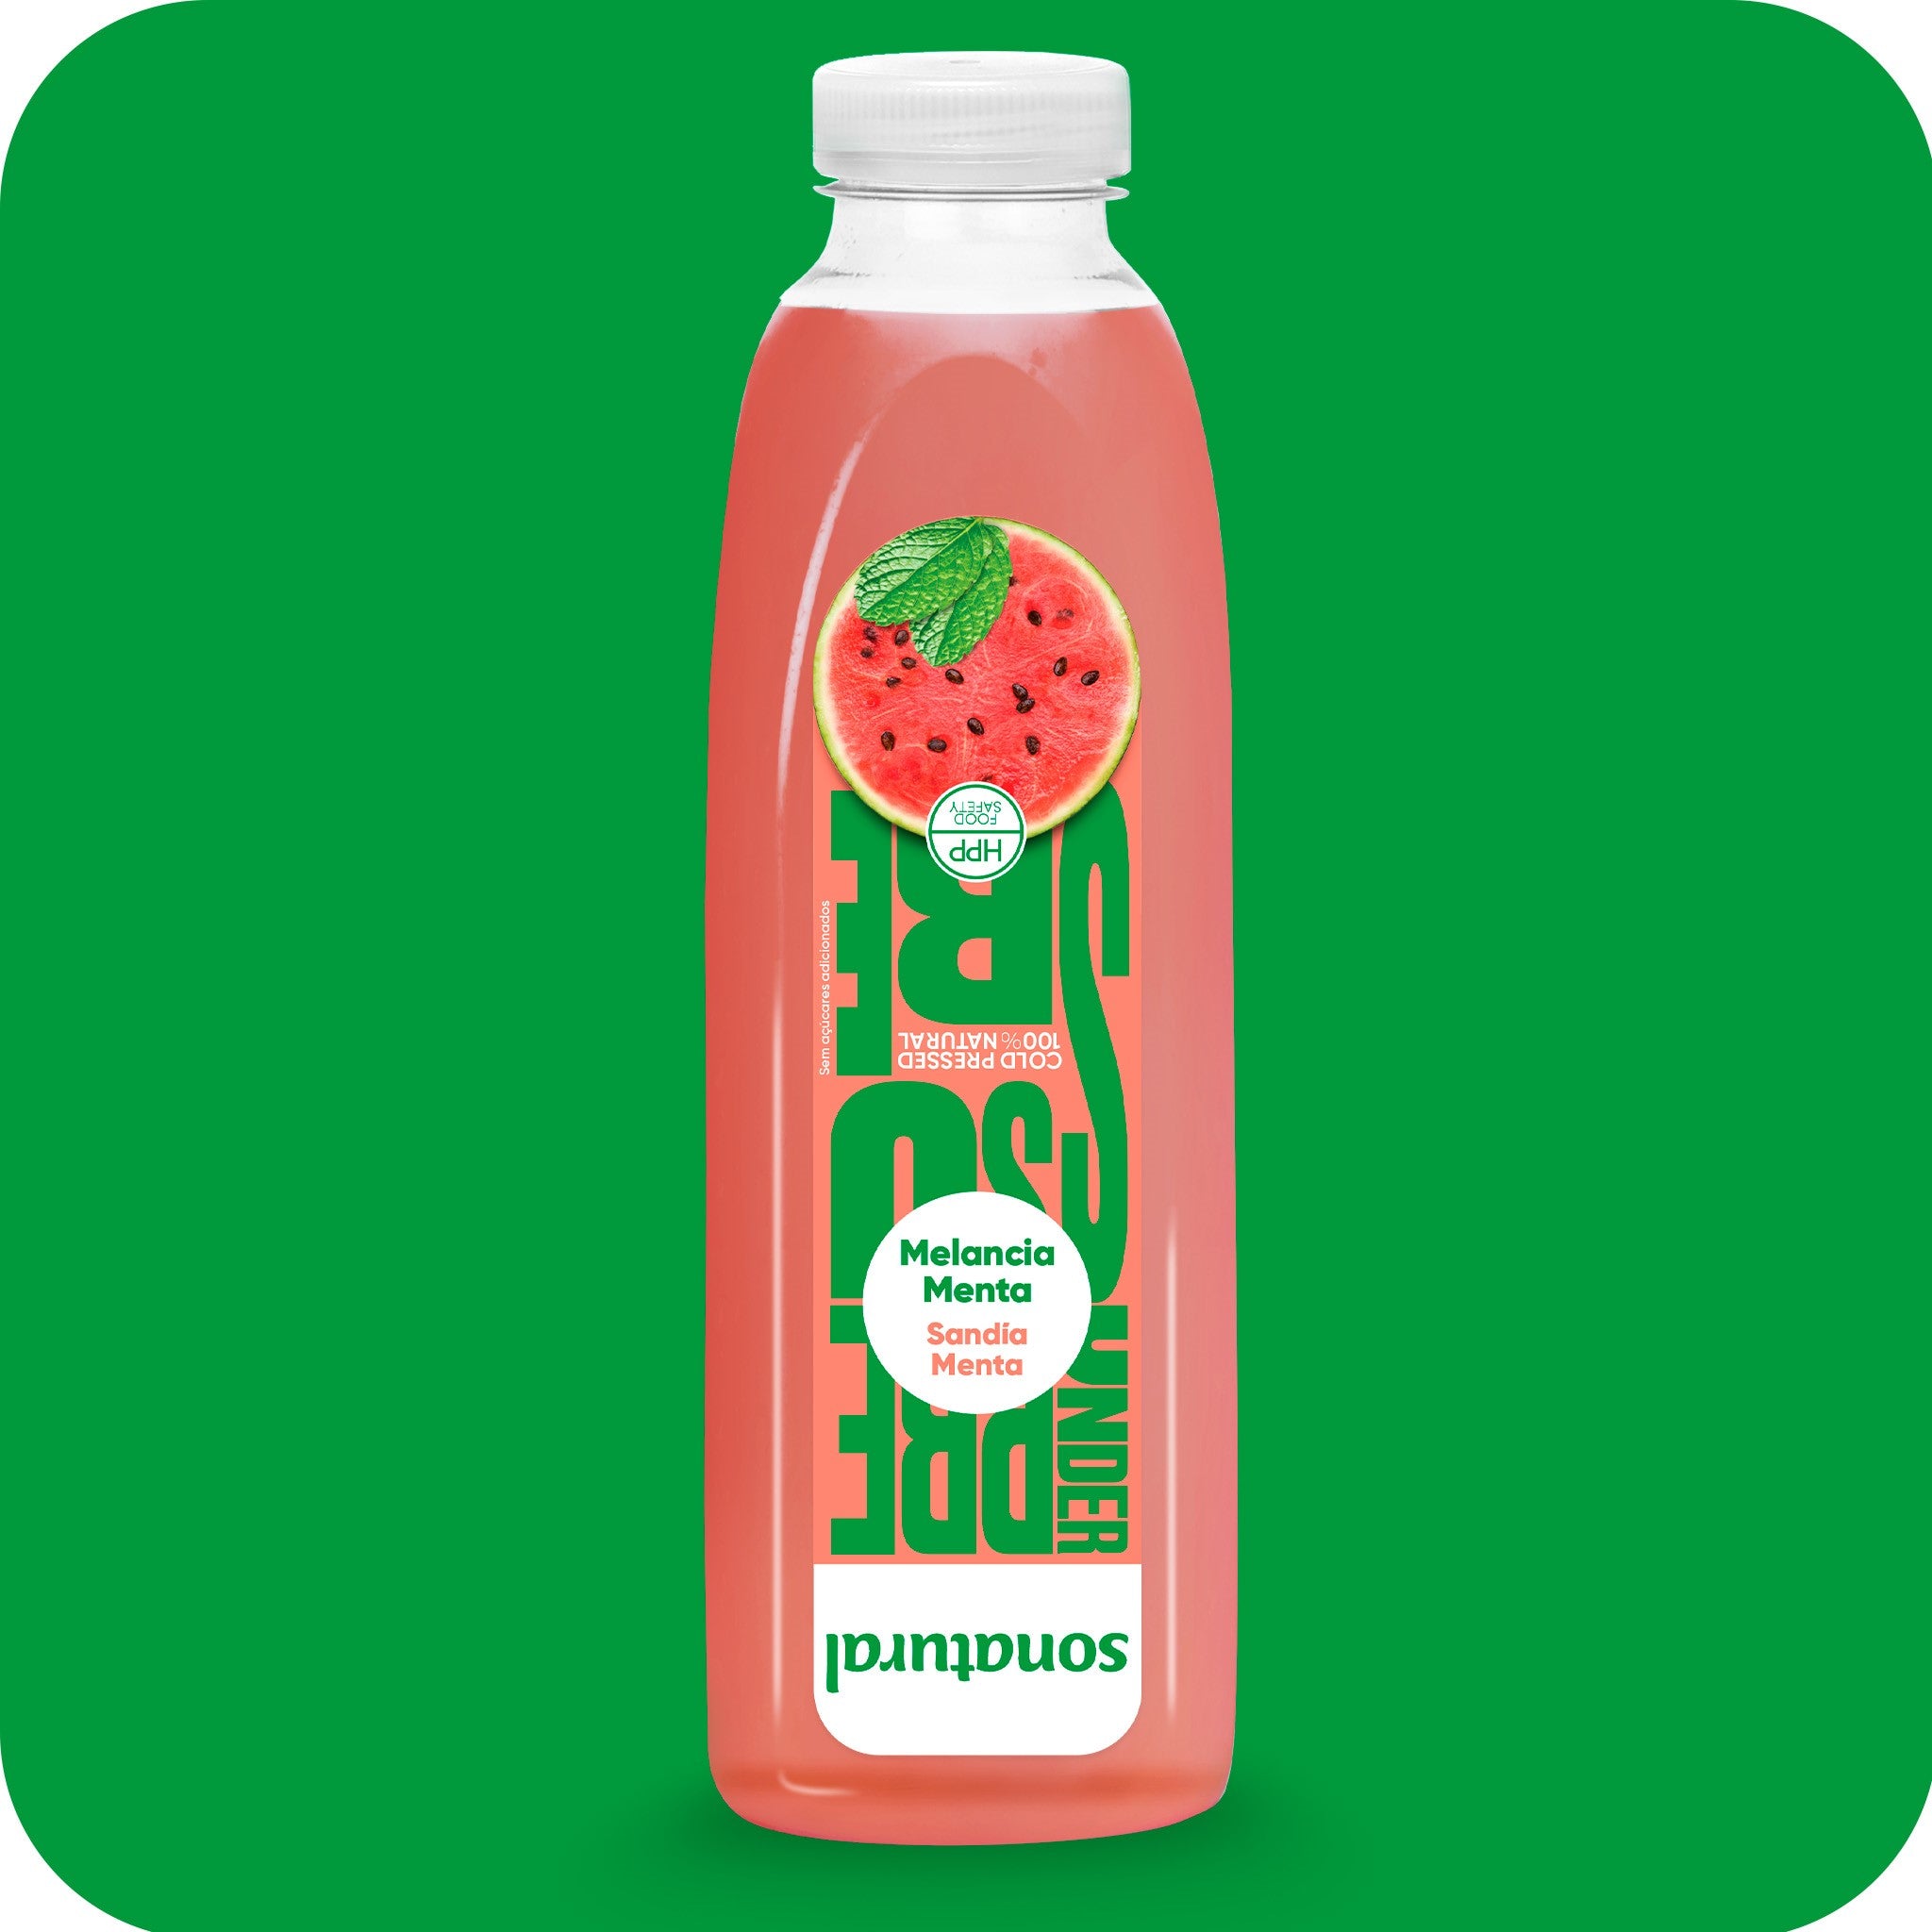 Sonatural Watermelon Juice 750ml